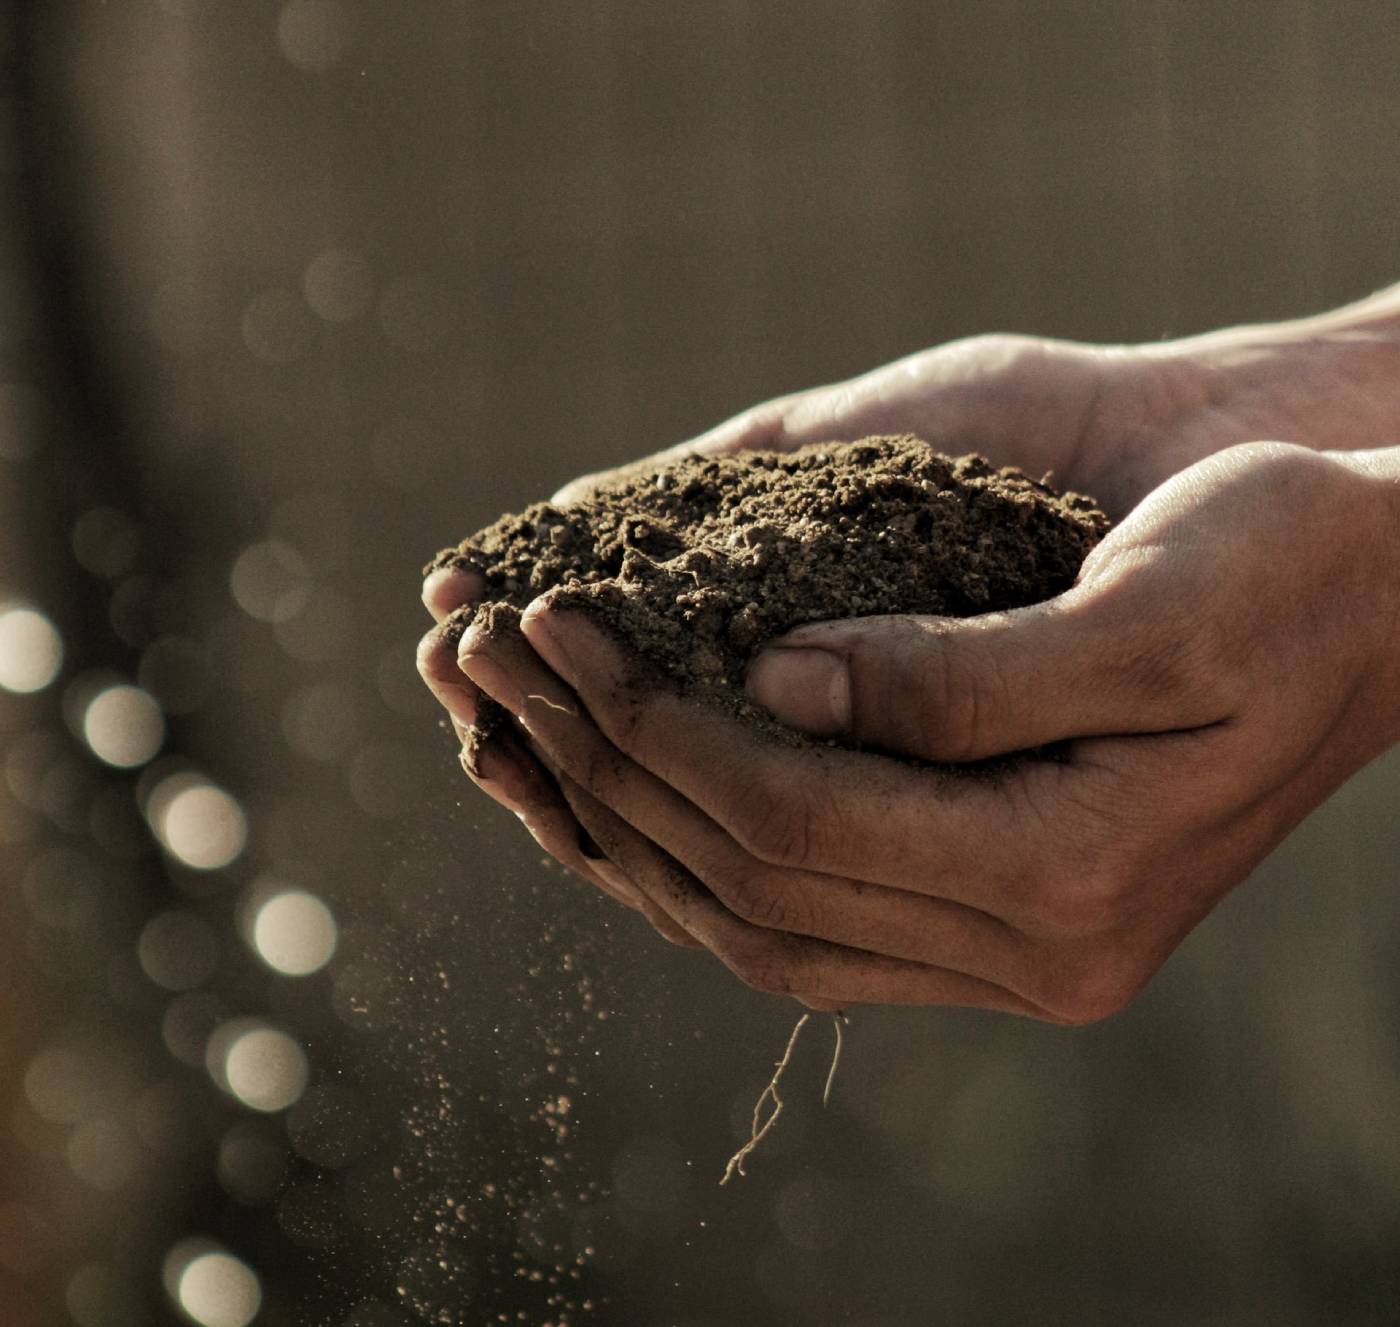 Soil in hands. Image credit: Gabriel Jimenez, Unsplash